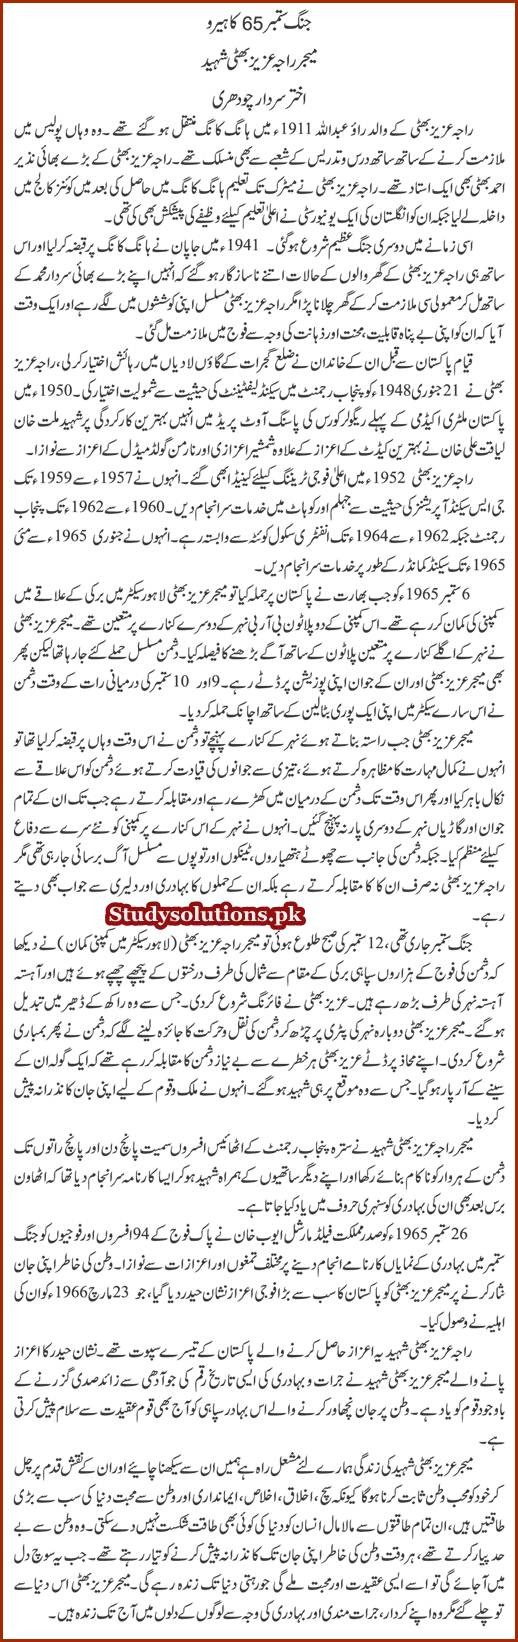 Biography of Major Aziz Bhatti in English & Urdu